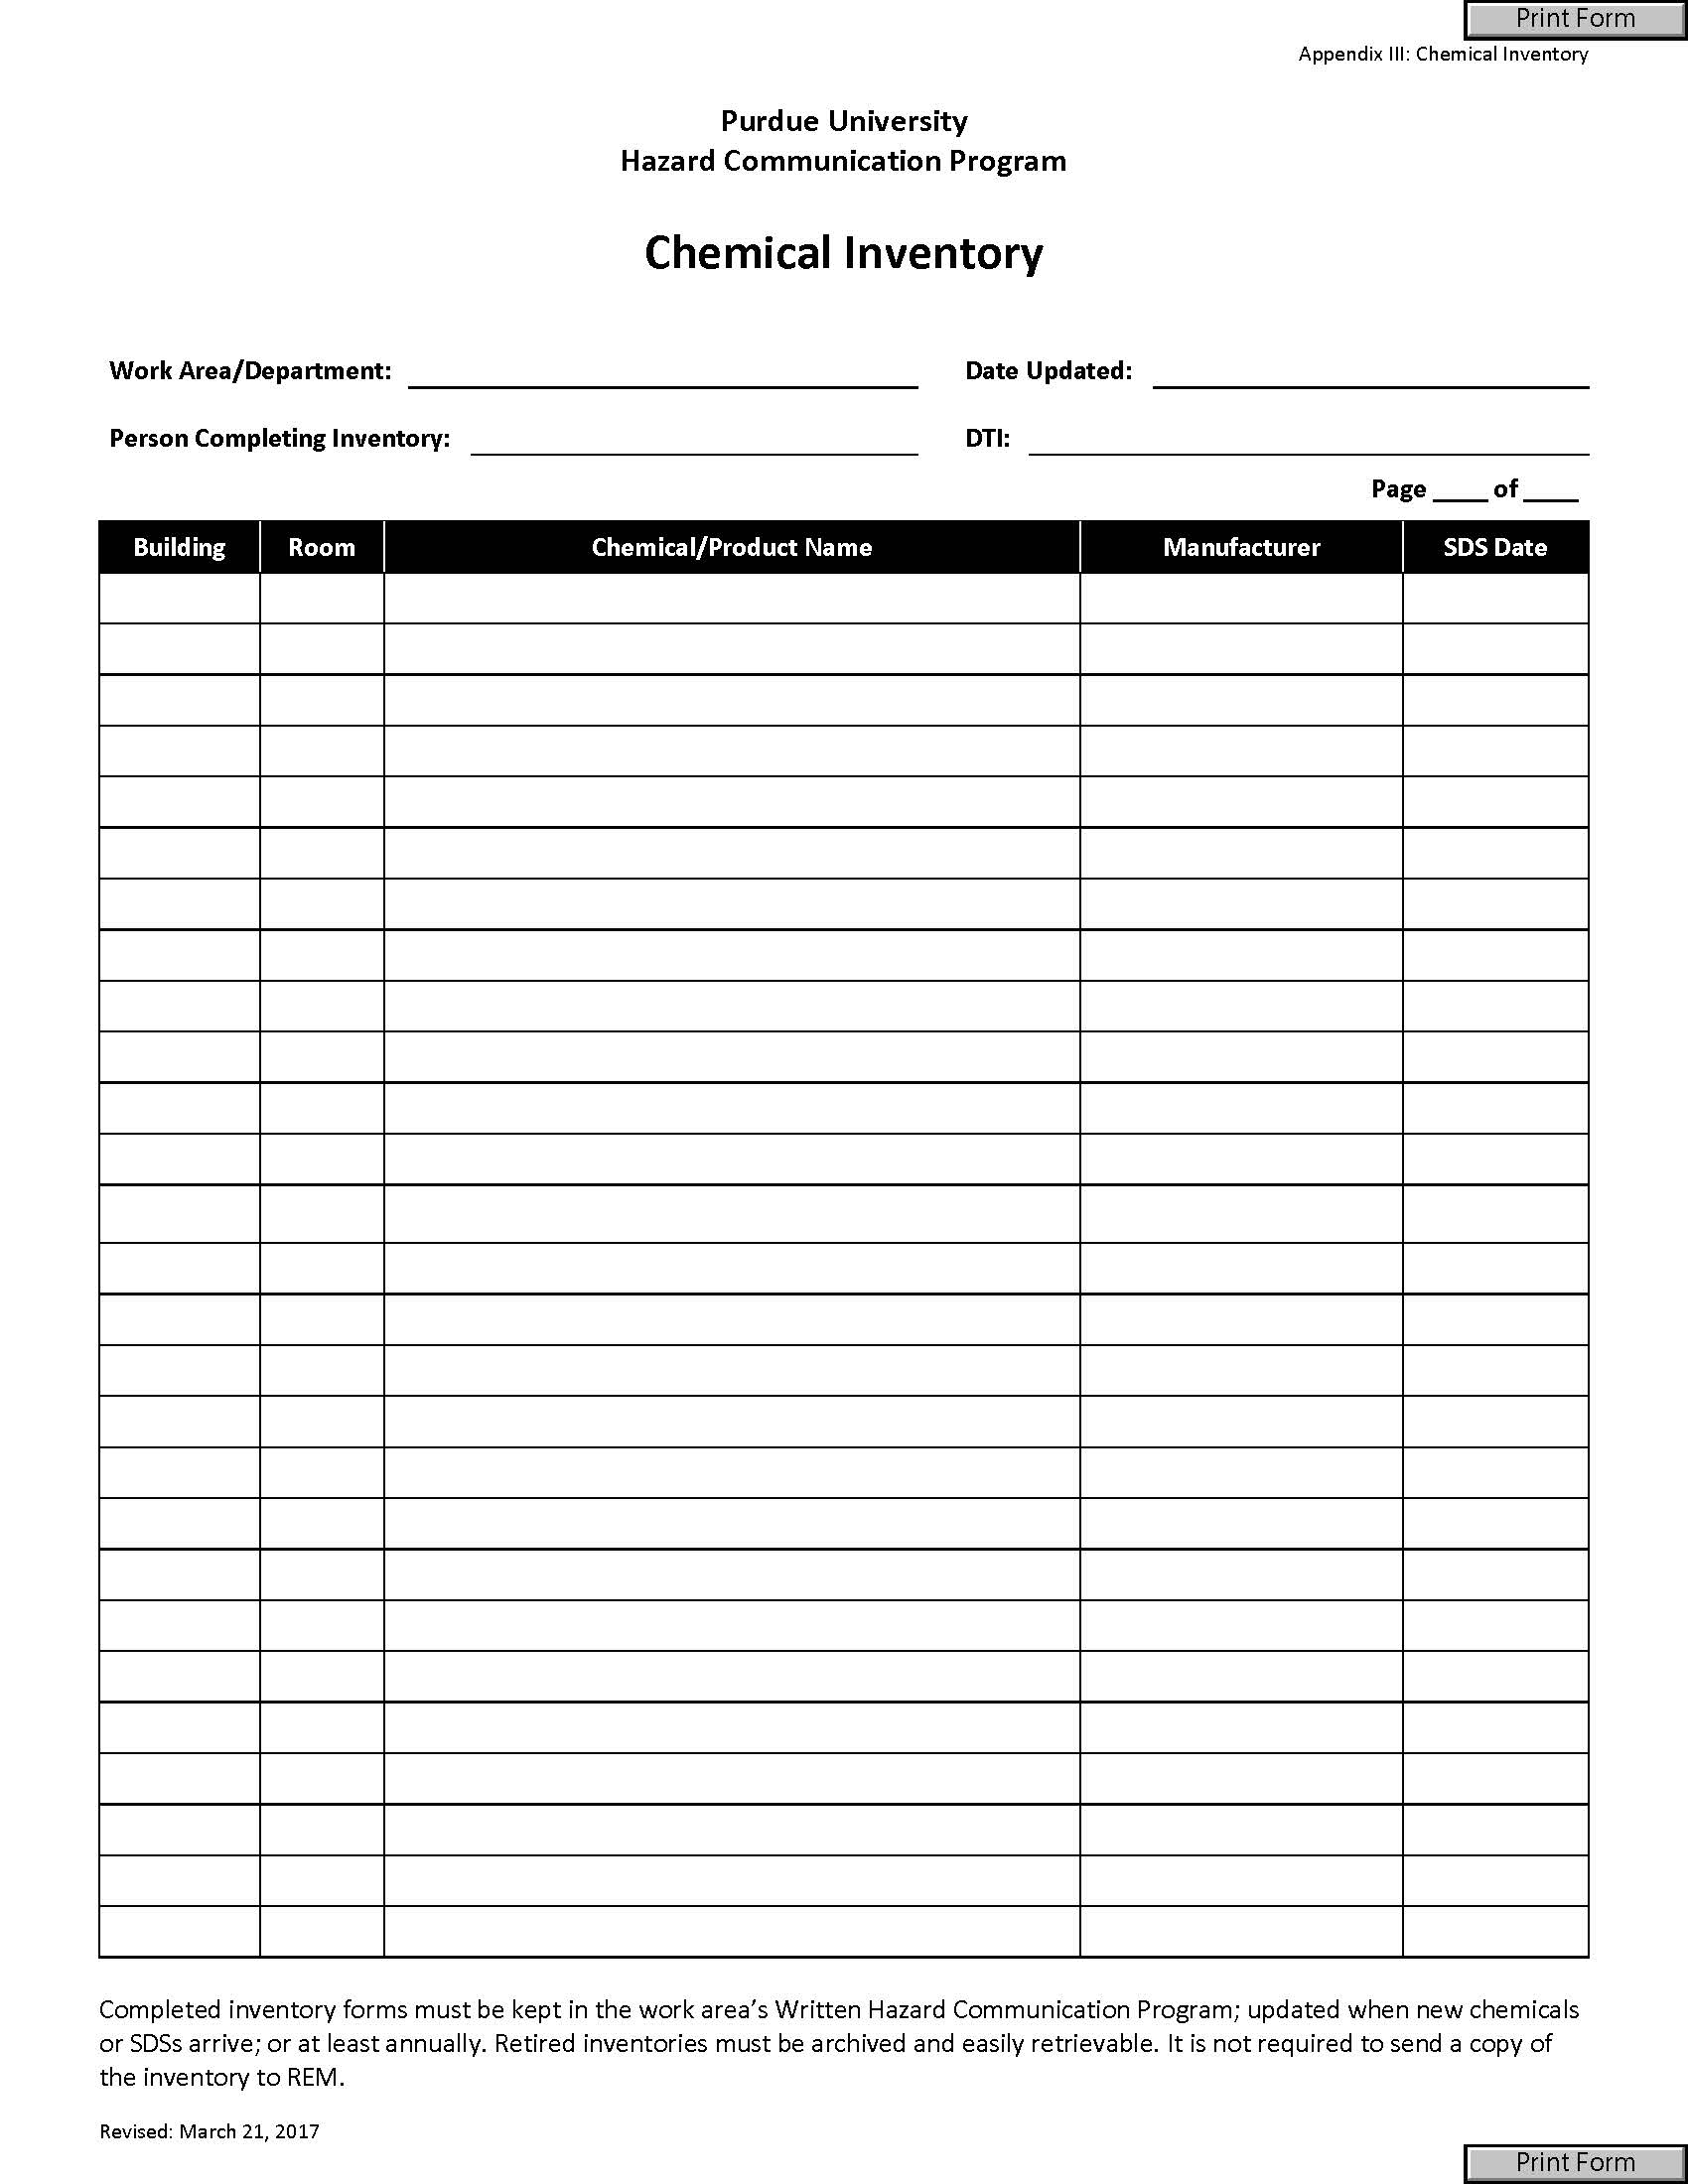 Inventory Log Sheet Template from www.purdue.edu